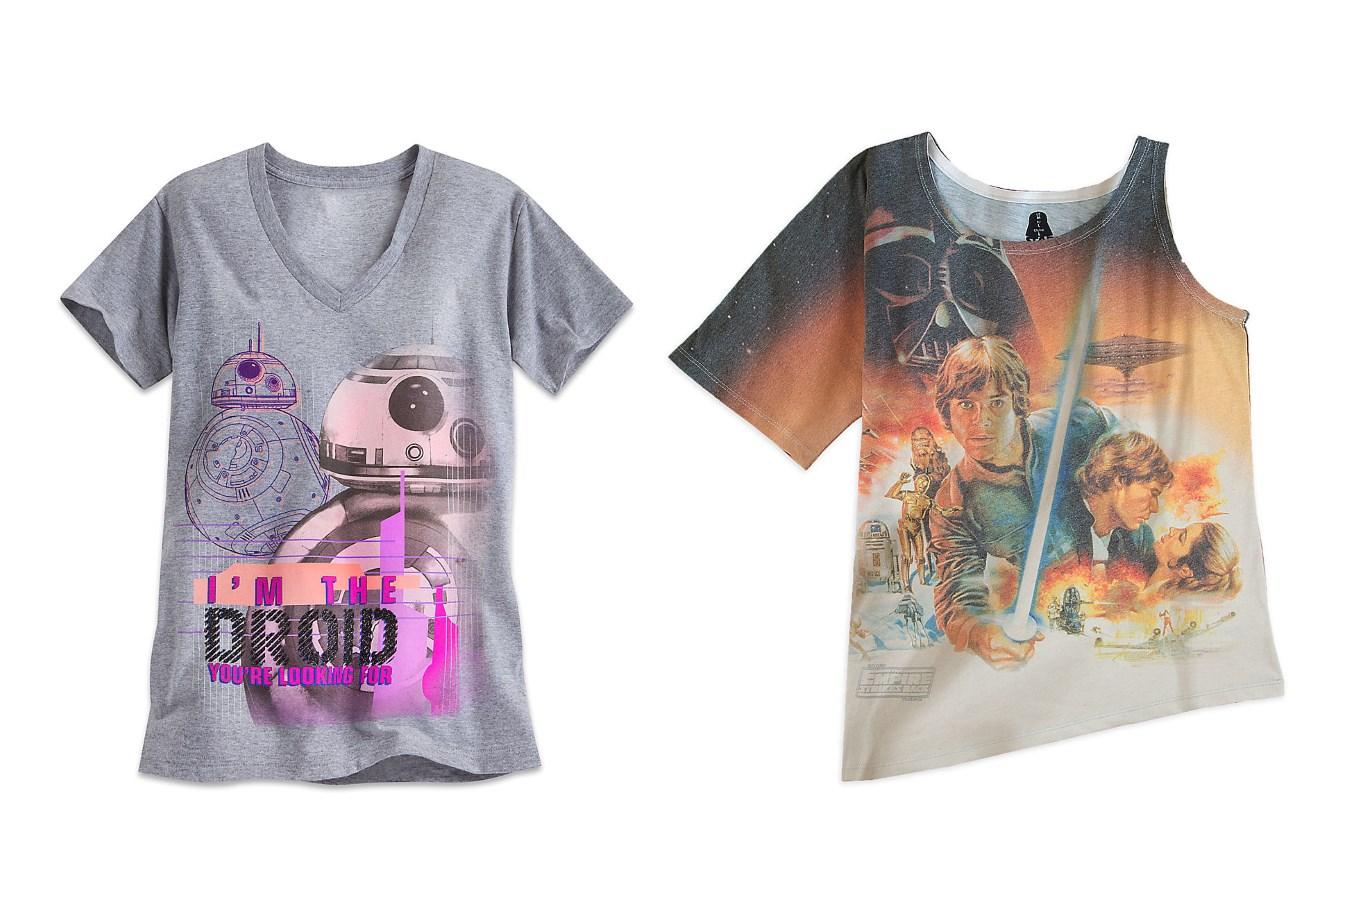 New Star Wars apparel at Disney Store